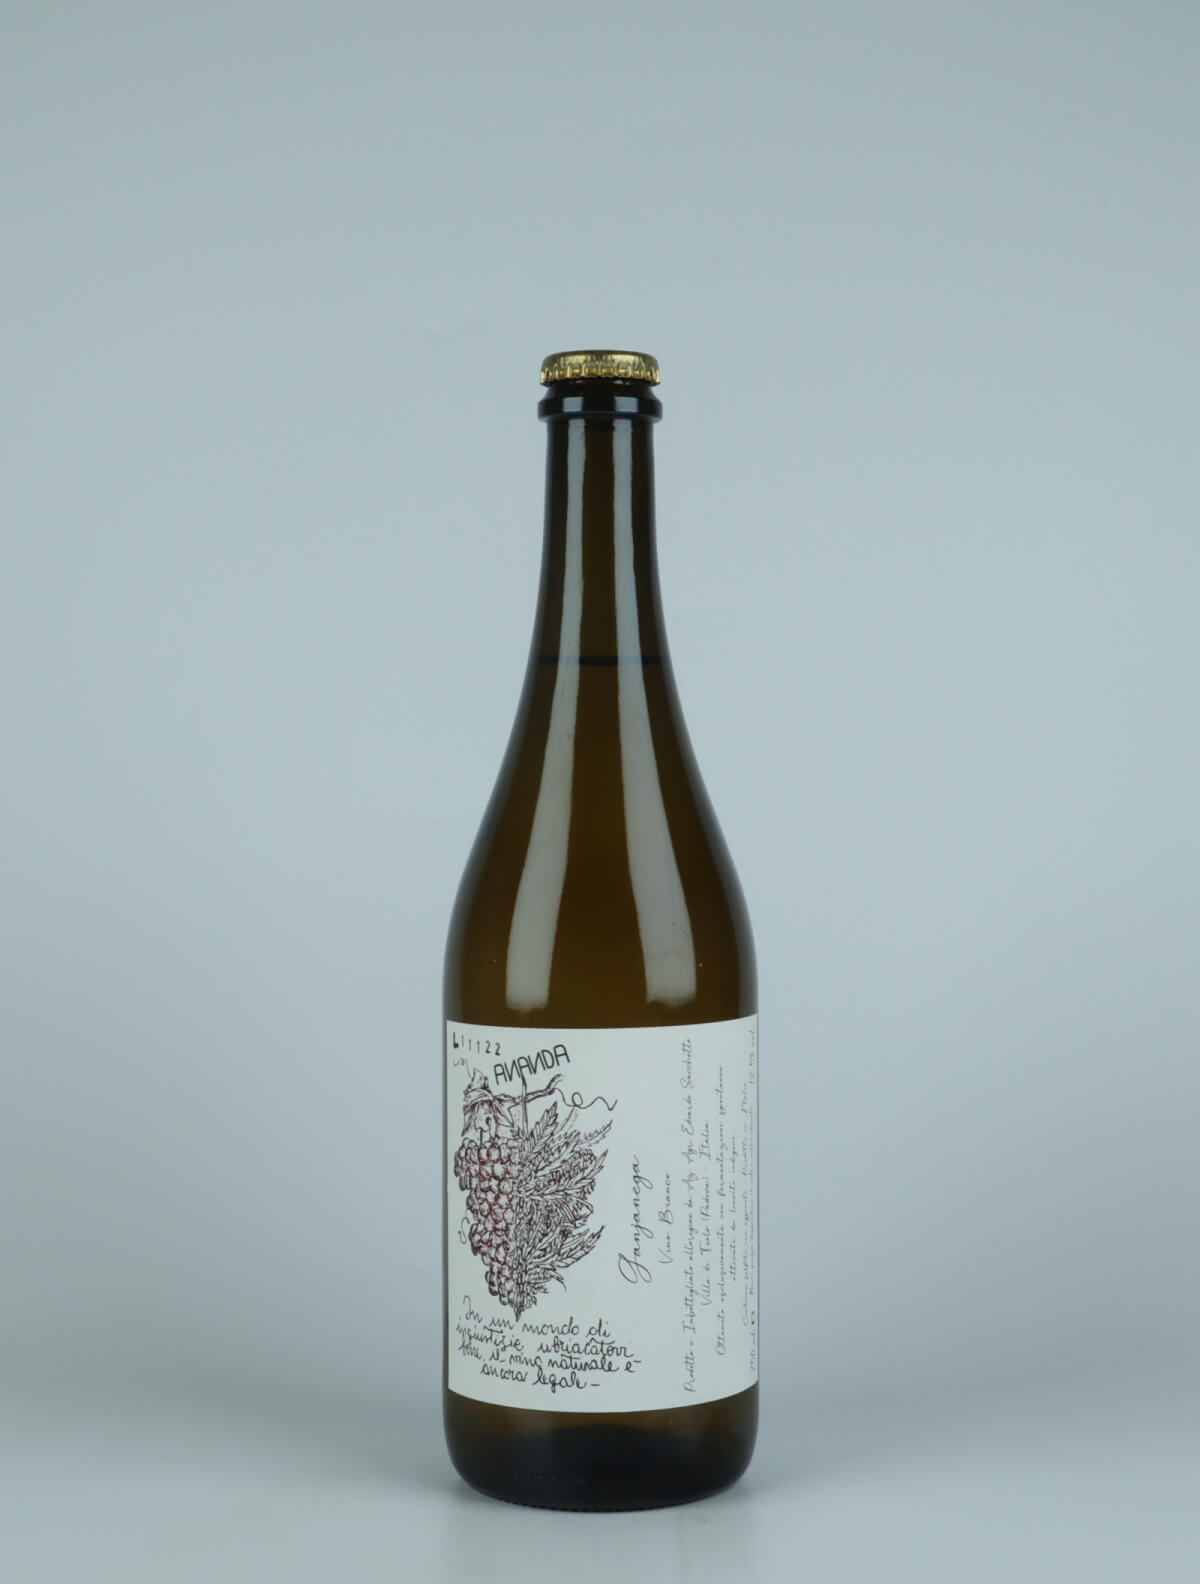 A bottle 2021 Ganjanega White wine from Edoardo Sacchetto, Veneto in Italy